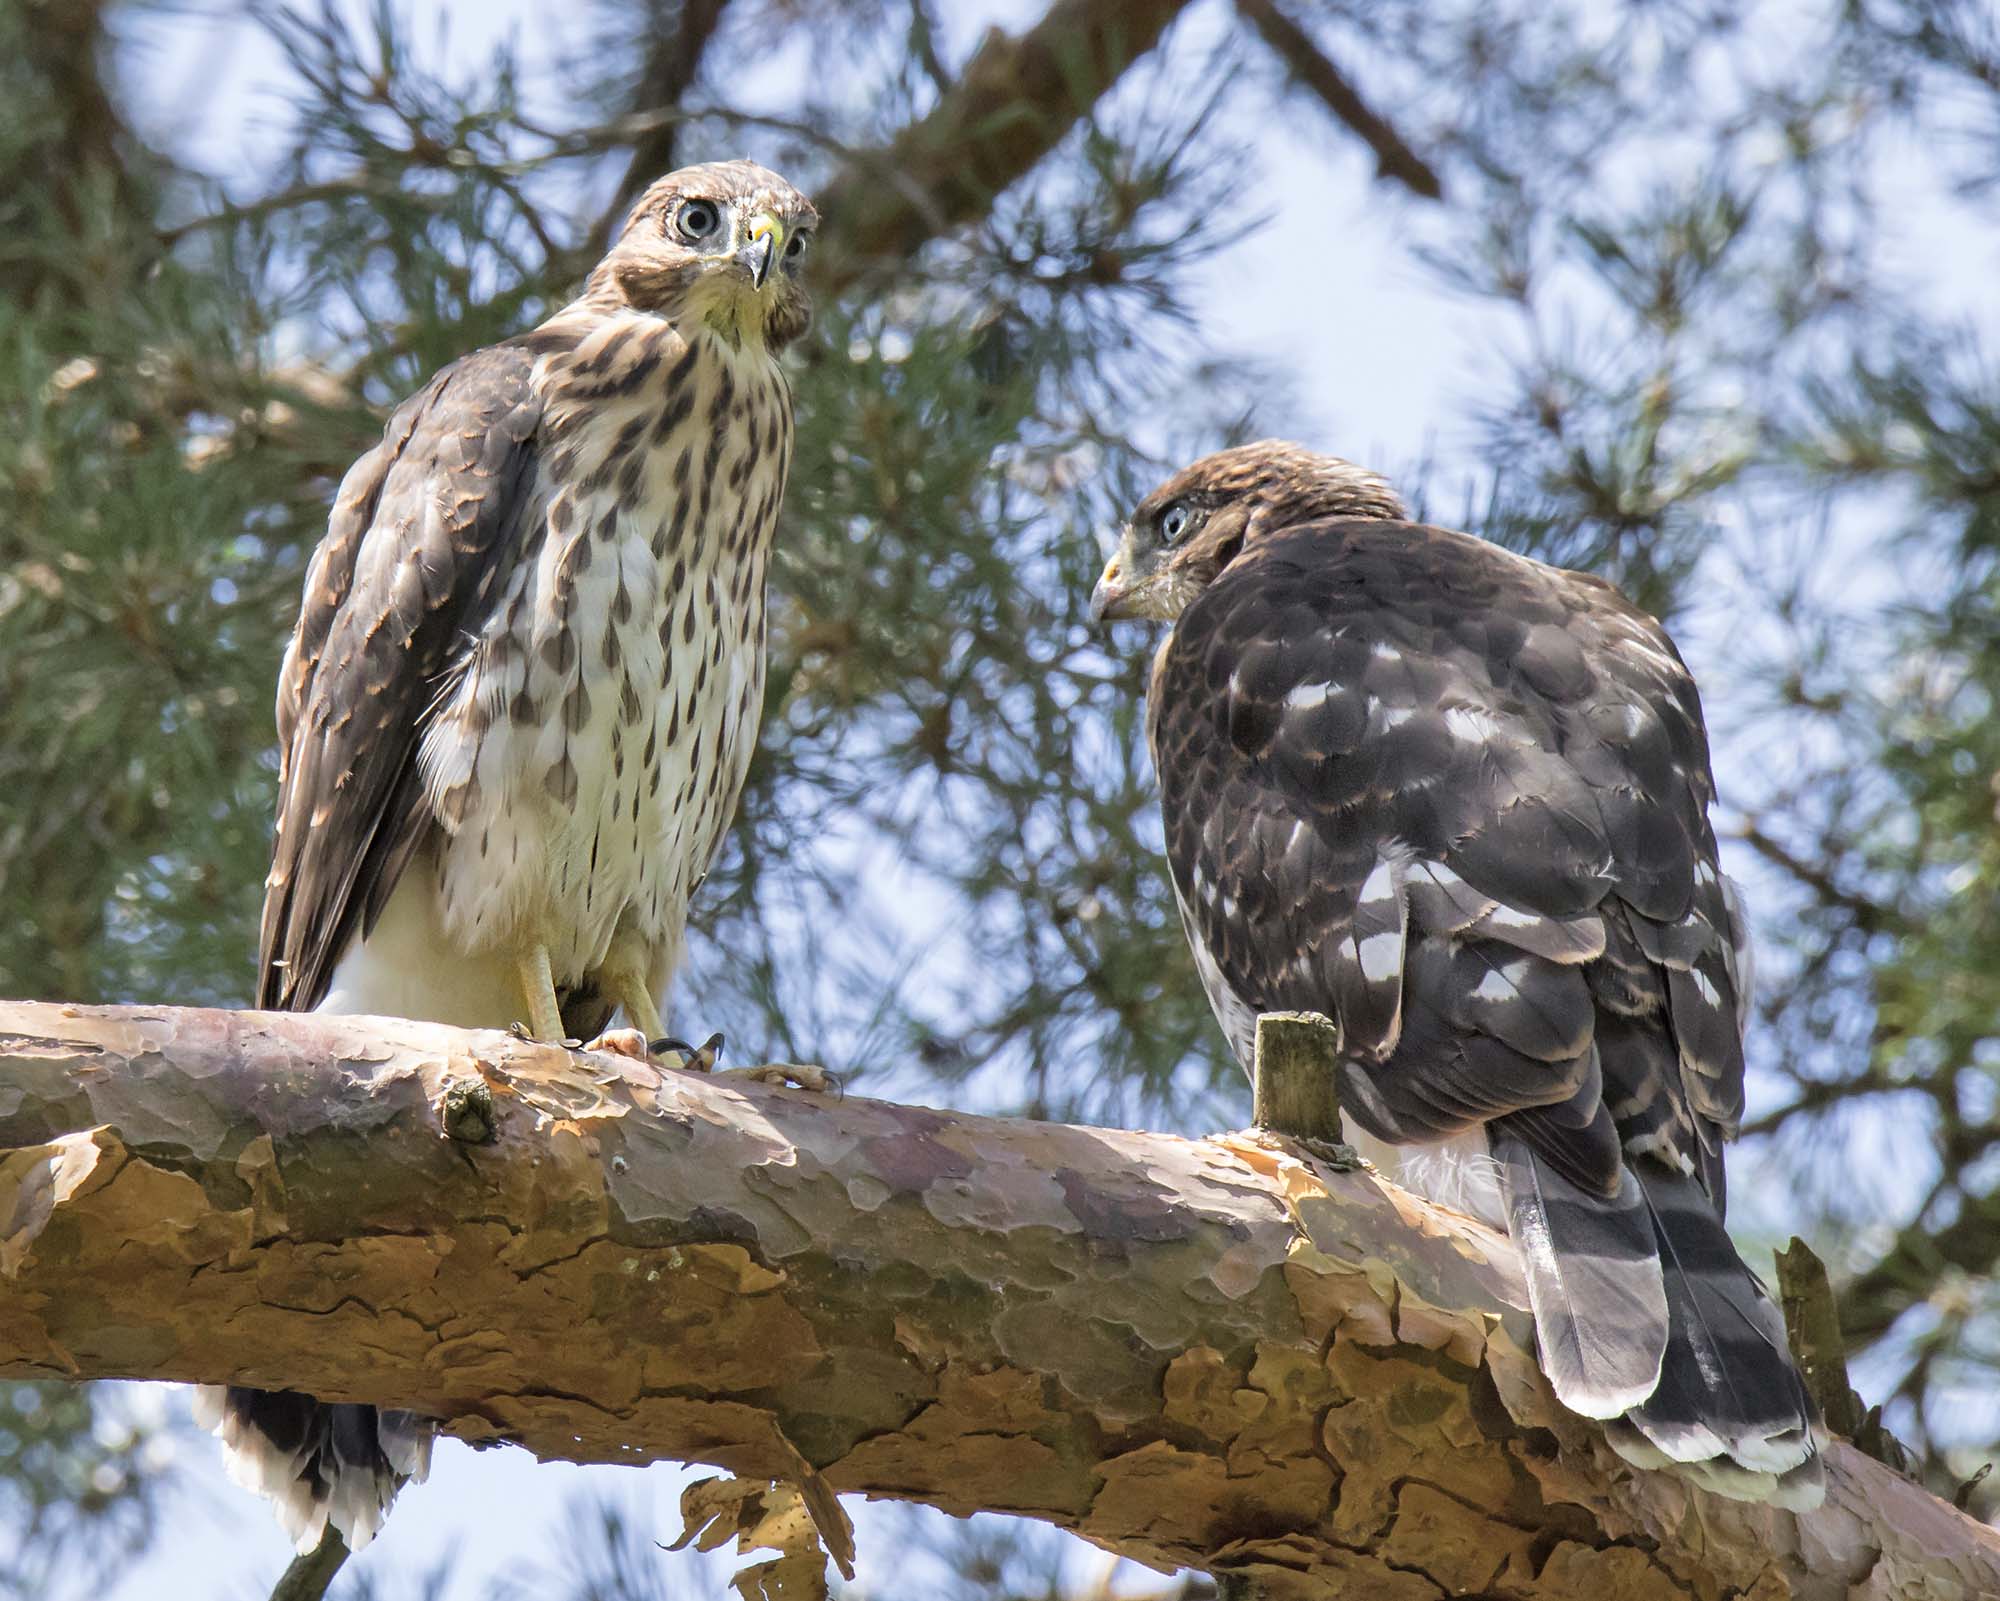 Coopers Hawk siblings sit together in tree